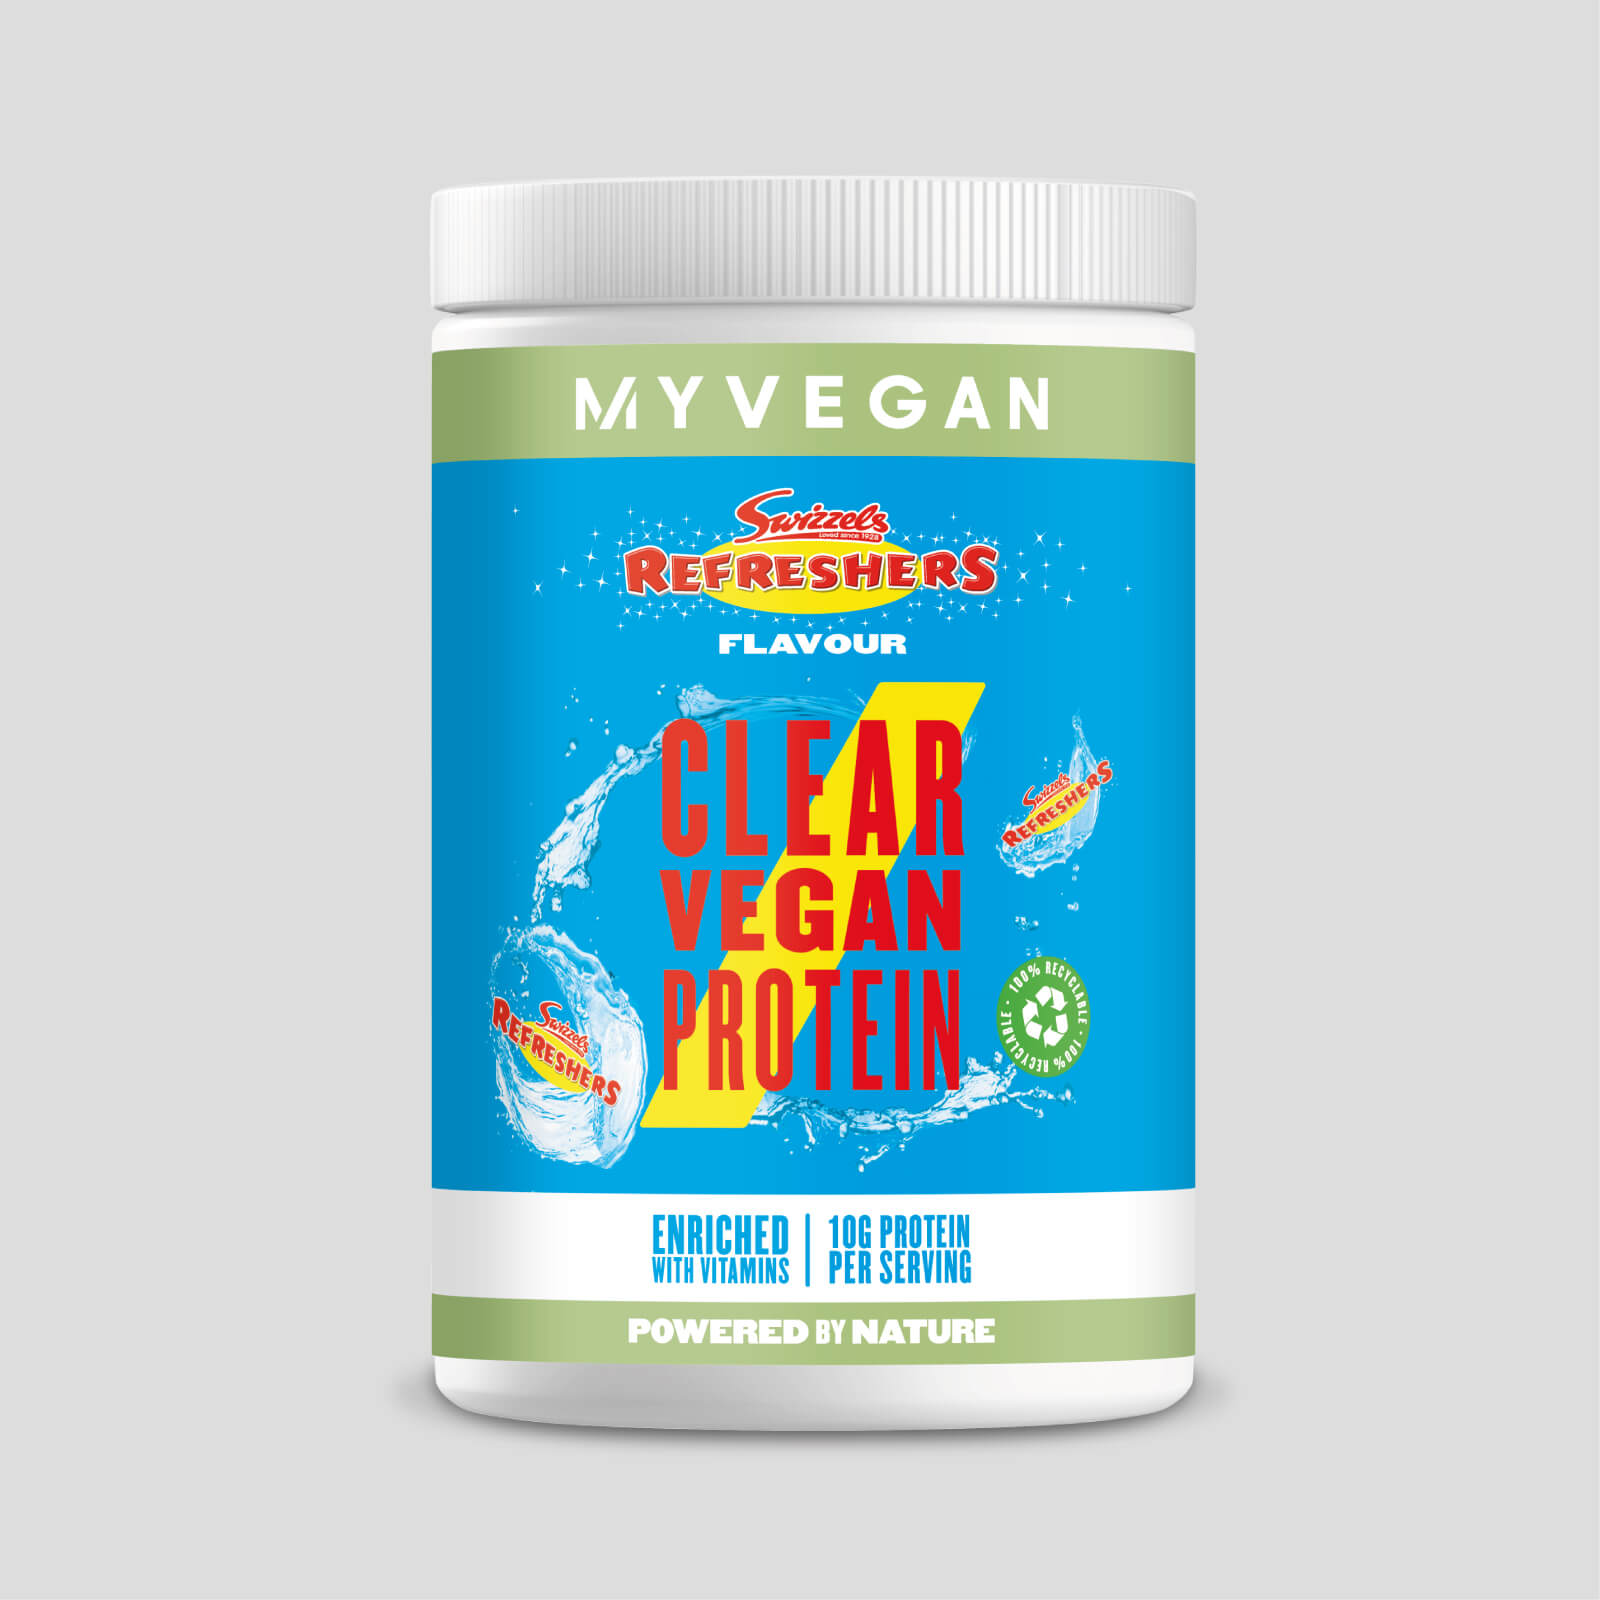 Myvegan Clear Vegan Protein - 10servings - Swizzels - Refreshers